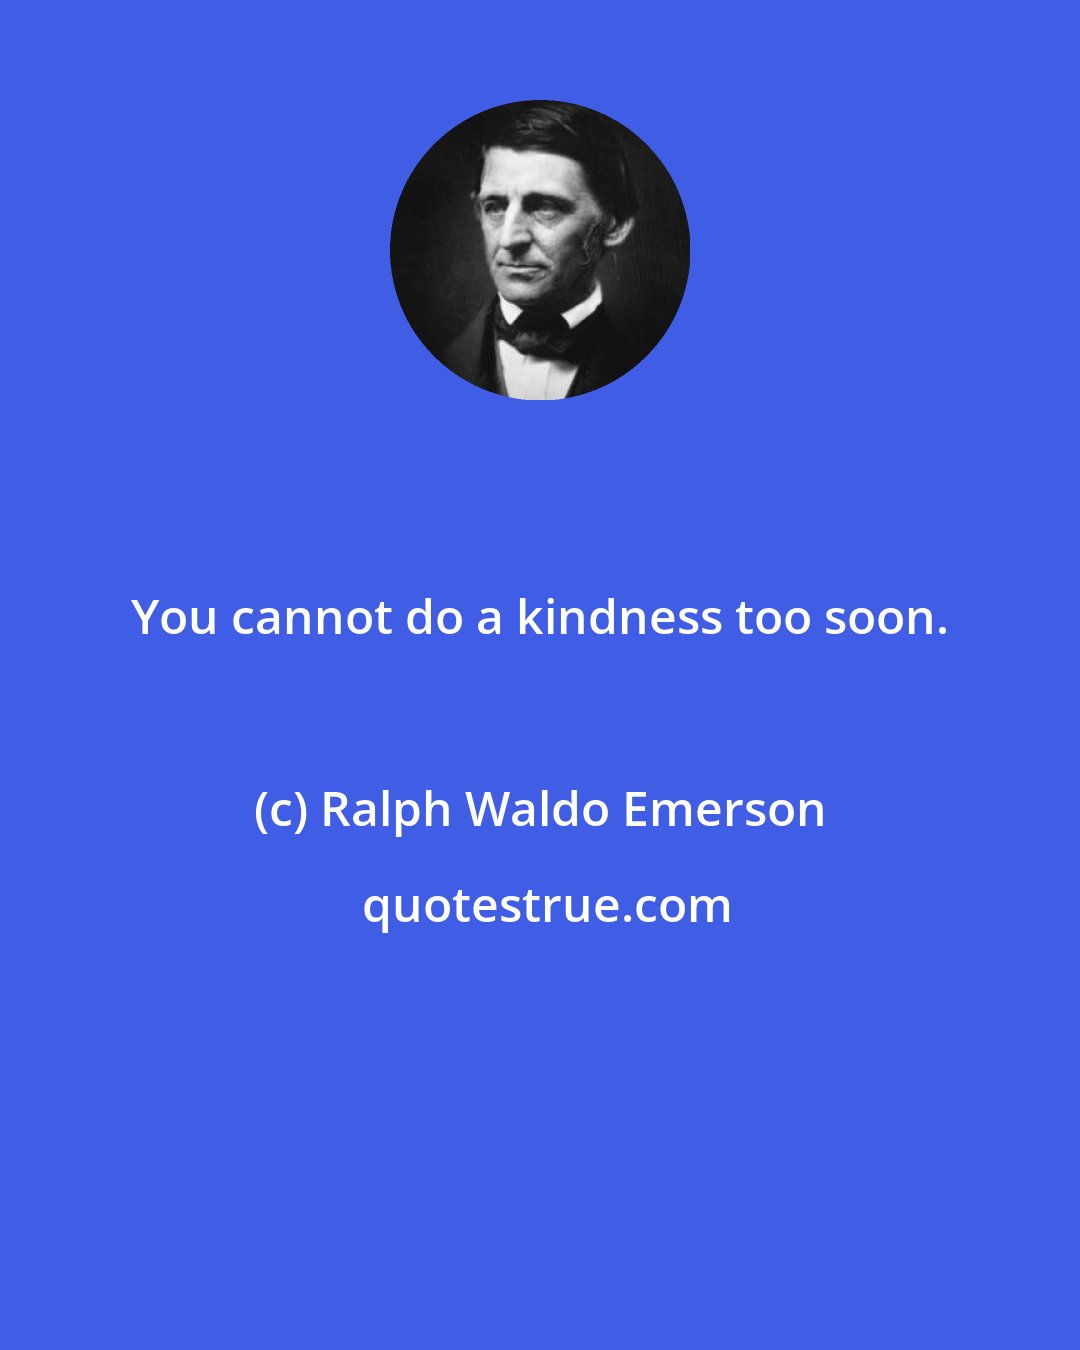 Ralph Waldo Emerson: You cannot do a kindness too soon.